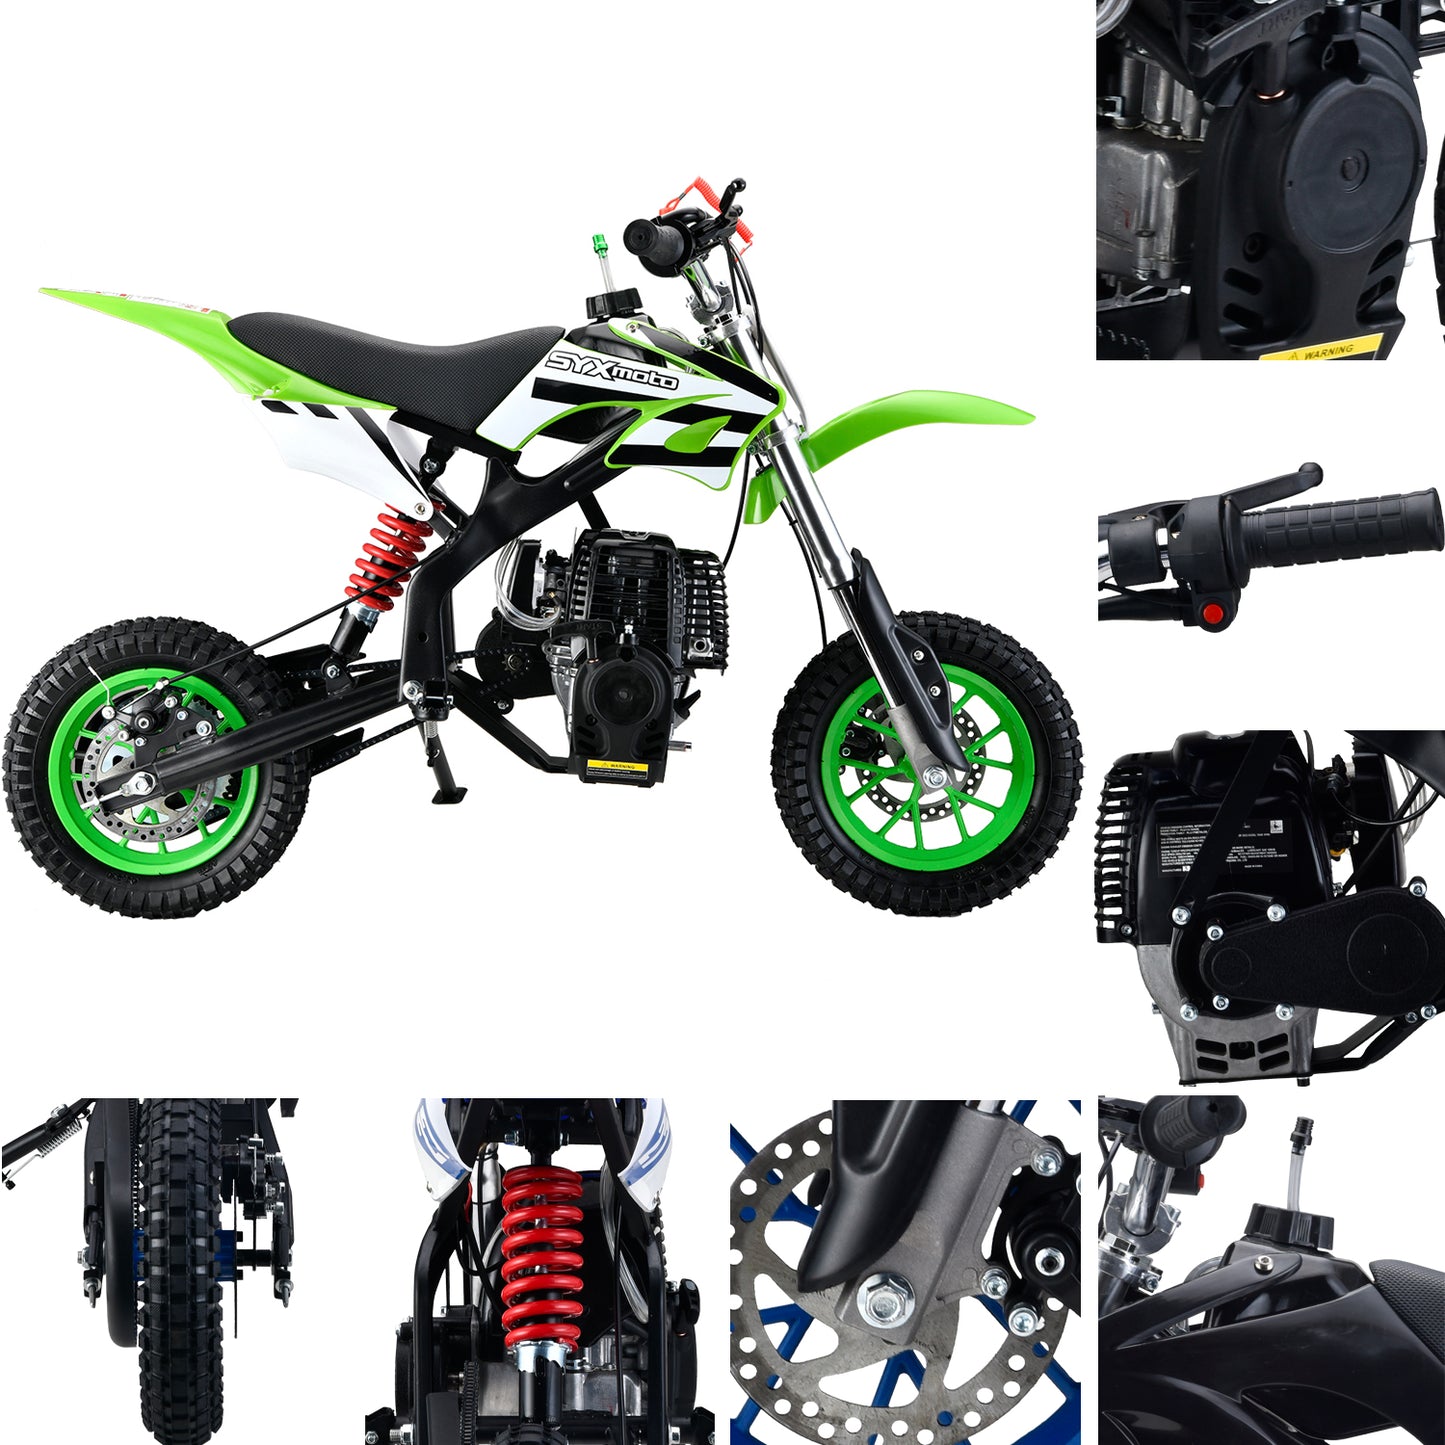 Dérive chaine dirt bike / pit bike / mini moto / moto modèle 2 - PitRacing